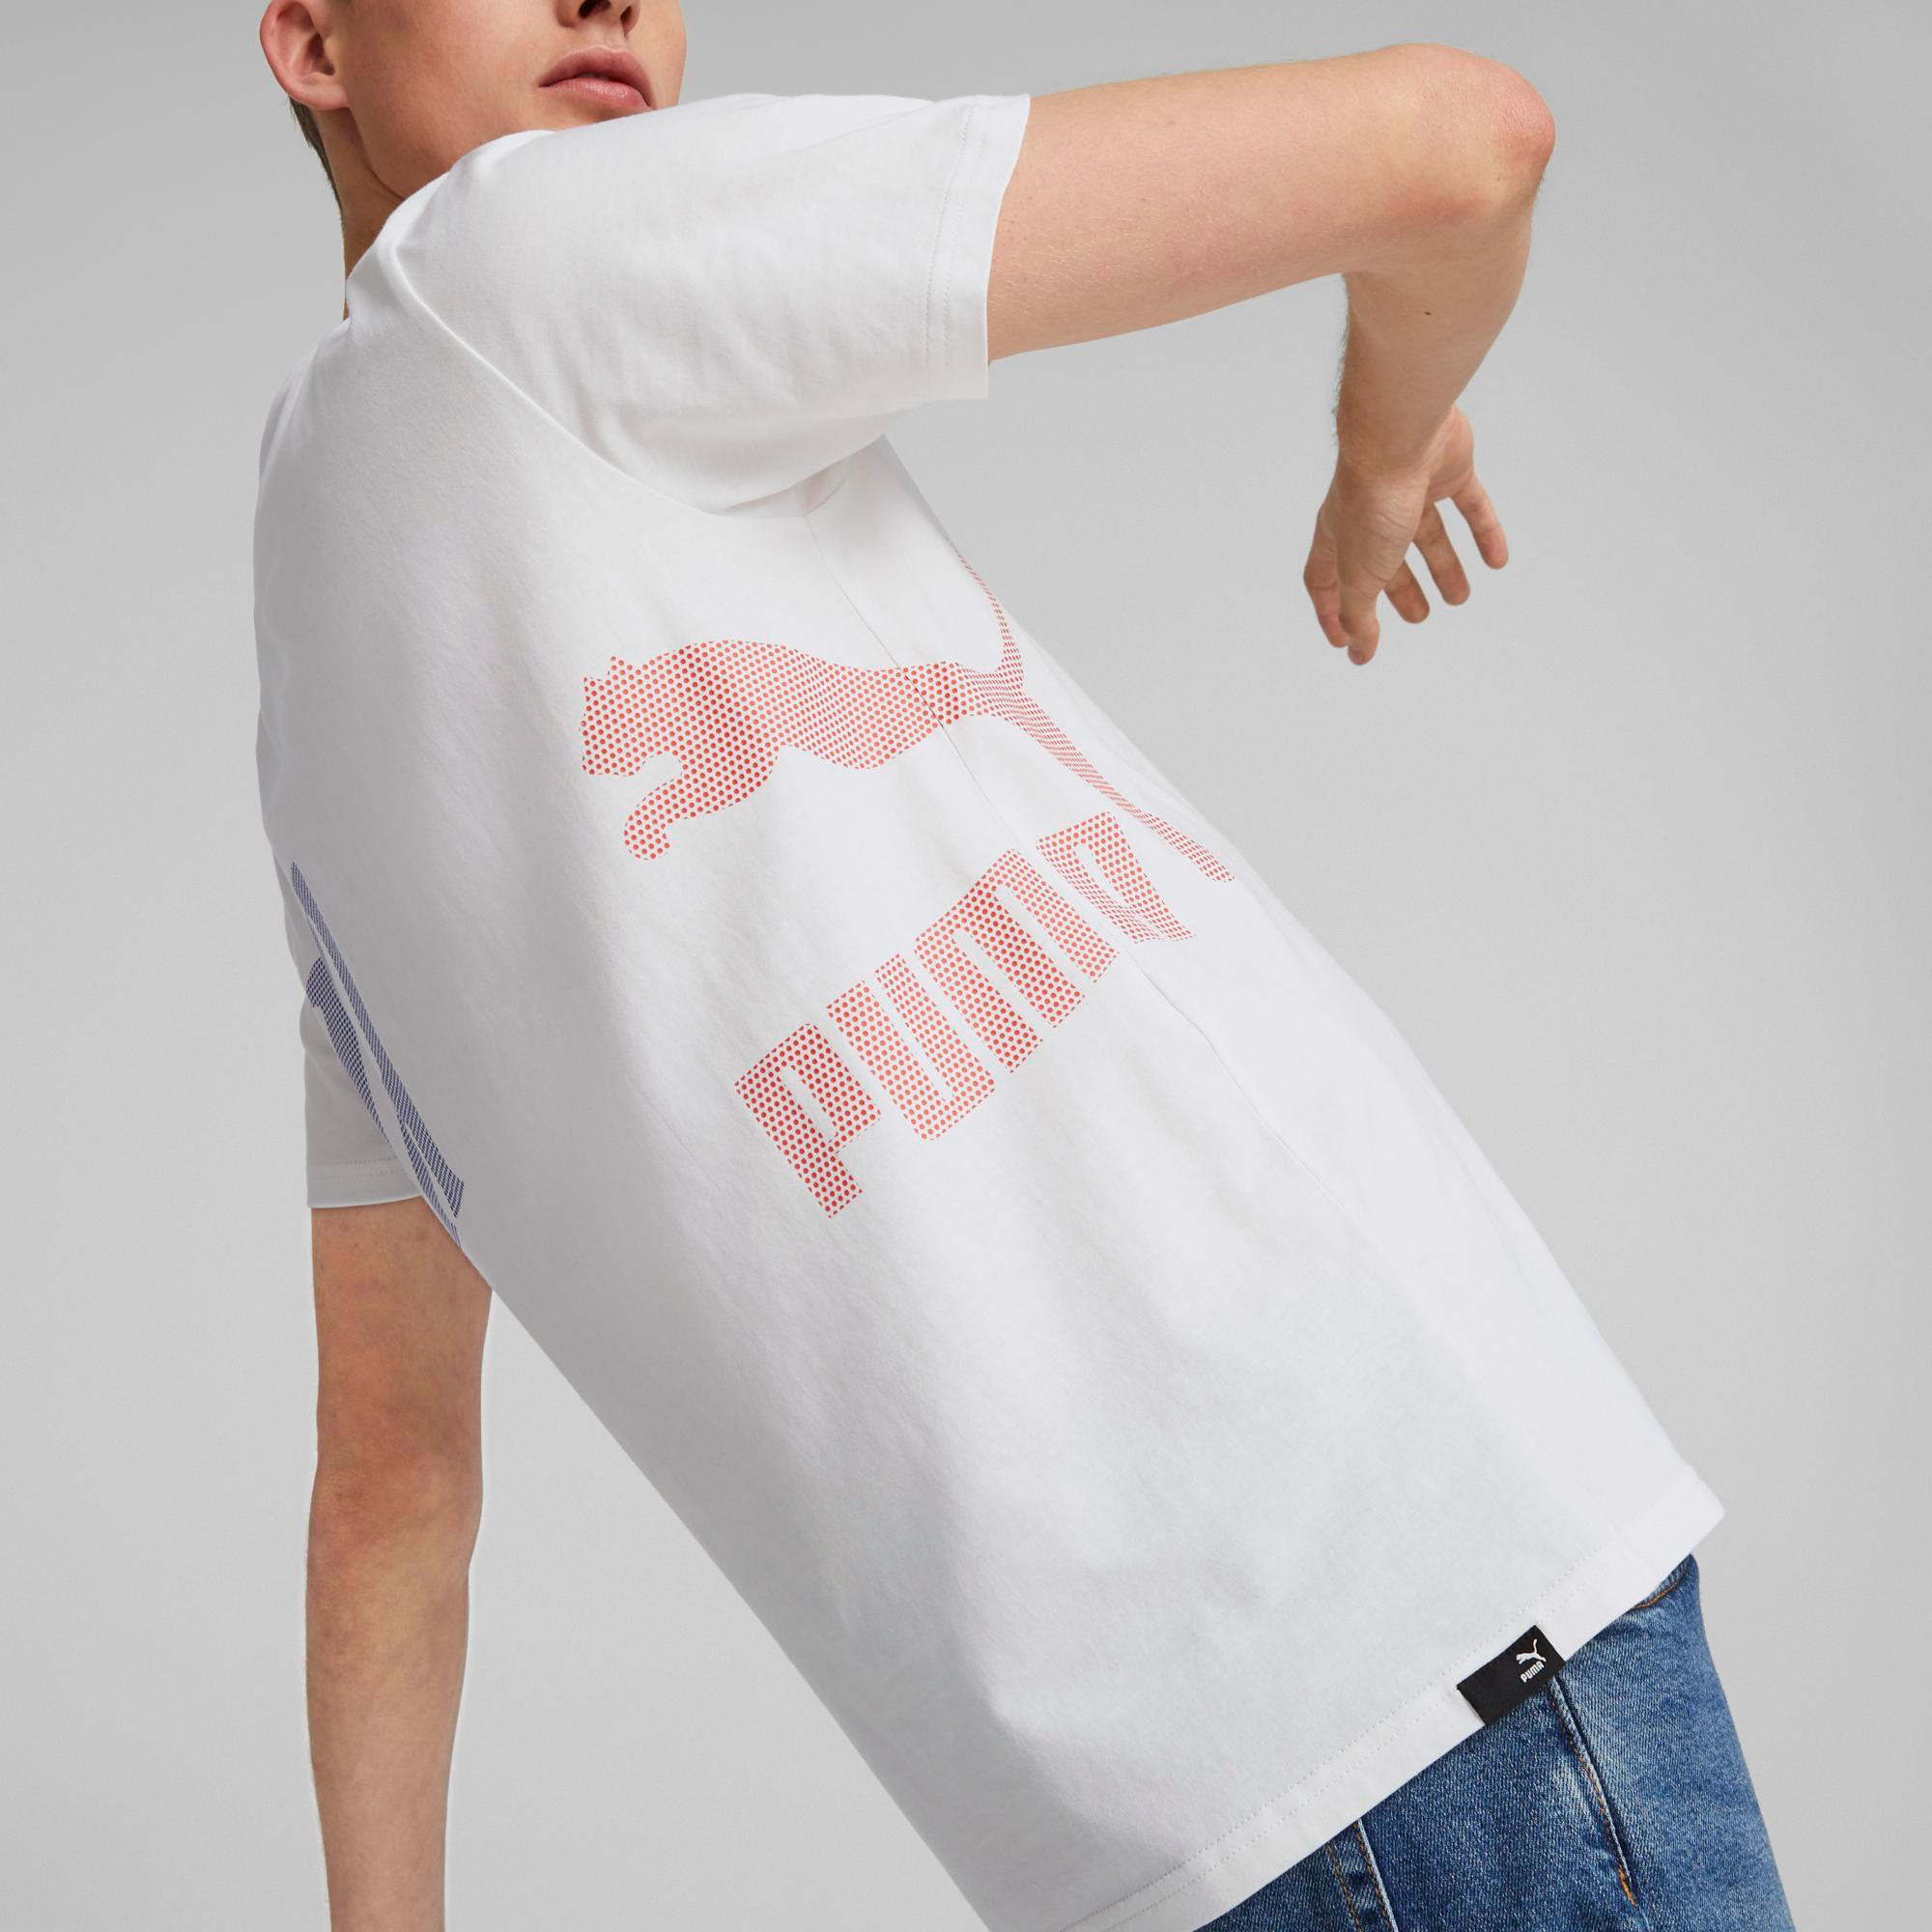 Puma - Cotton T-shirt with logo, White, large image number 4